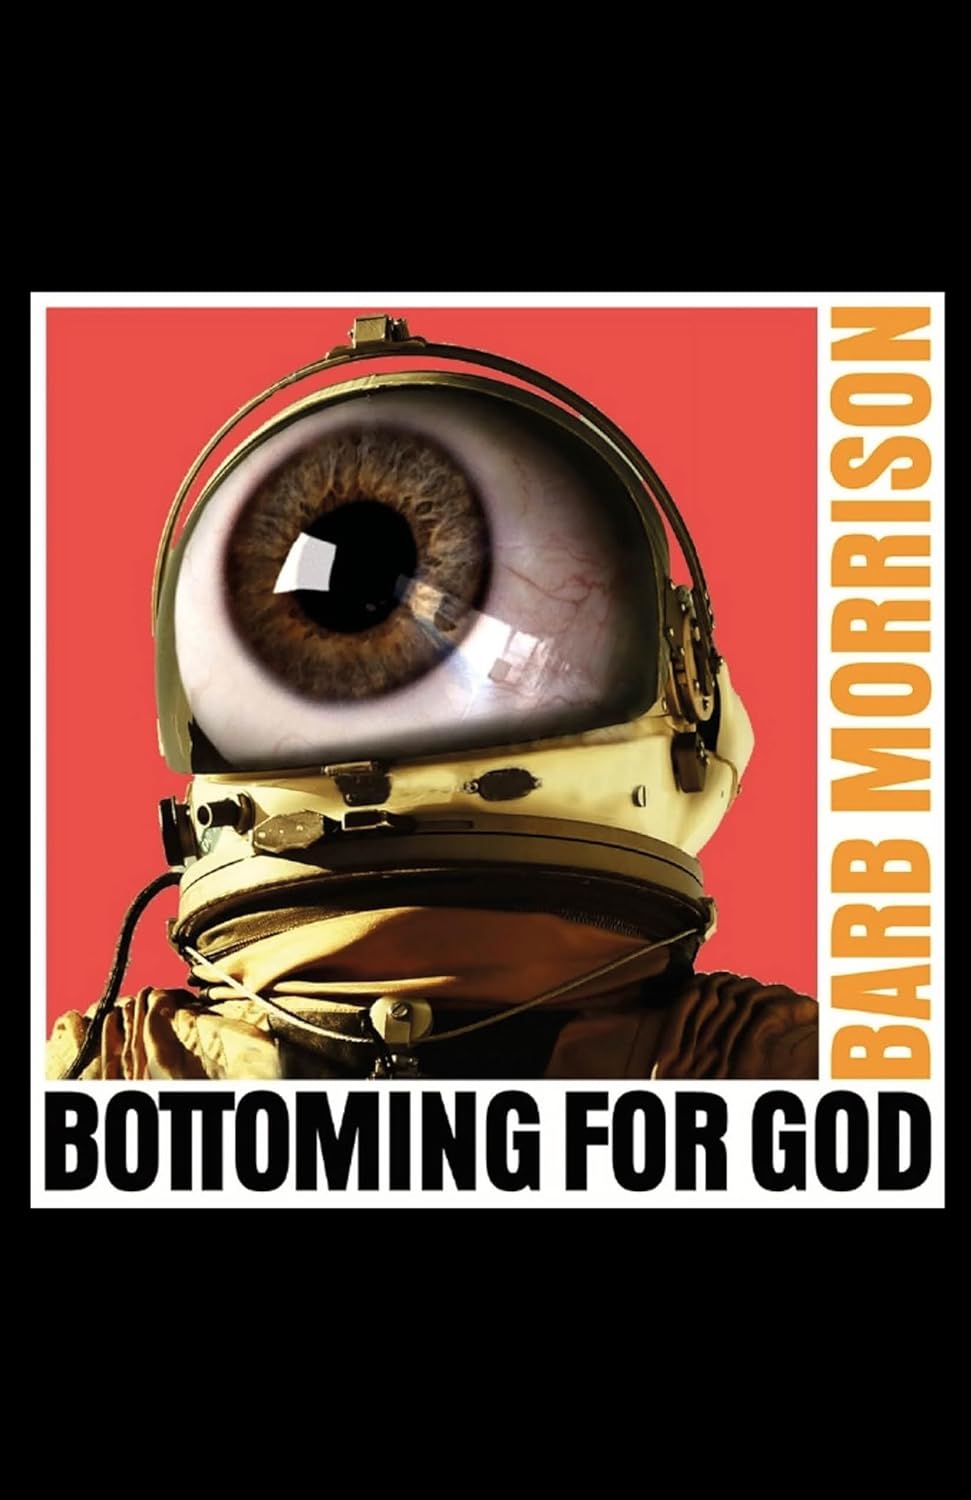 Bottoming for God